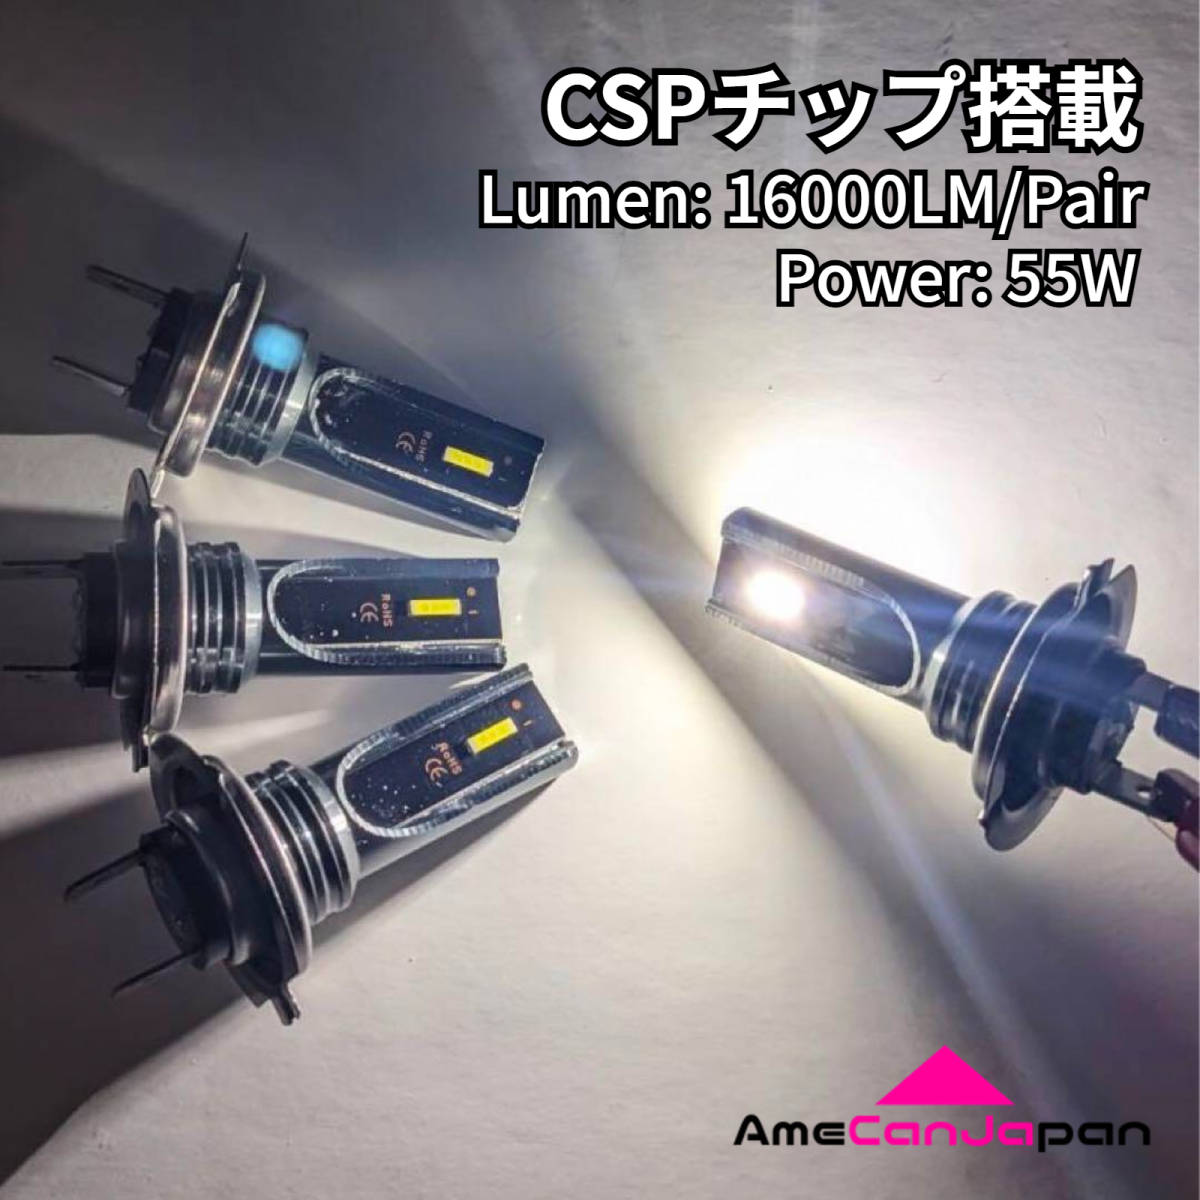 AmeCanJapan SUZUKI Bandit1250S GW72A 適合 H7 LED ヘッドライト バイク用 Hi LOW ホワイト 2灯 爆光 CSPチップ搭載_画像4